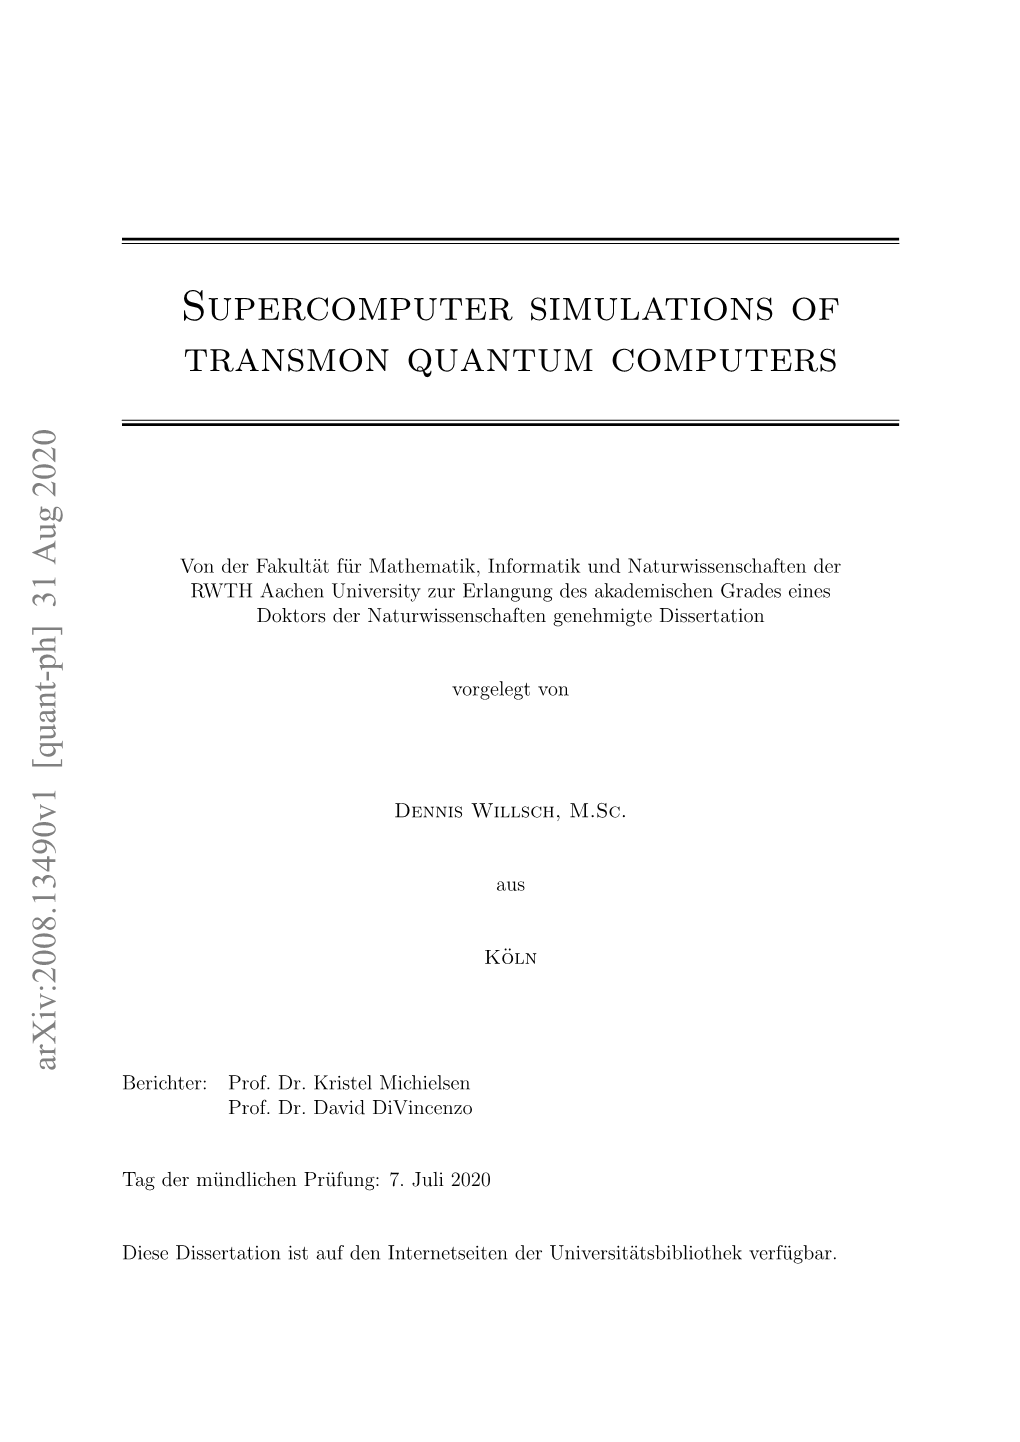 Supercomputer Simulations of Transmon Quantum Computers